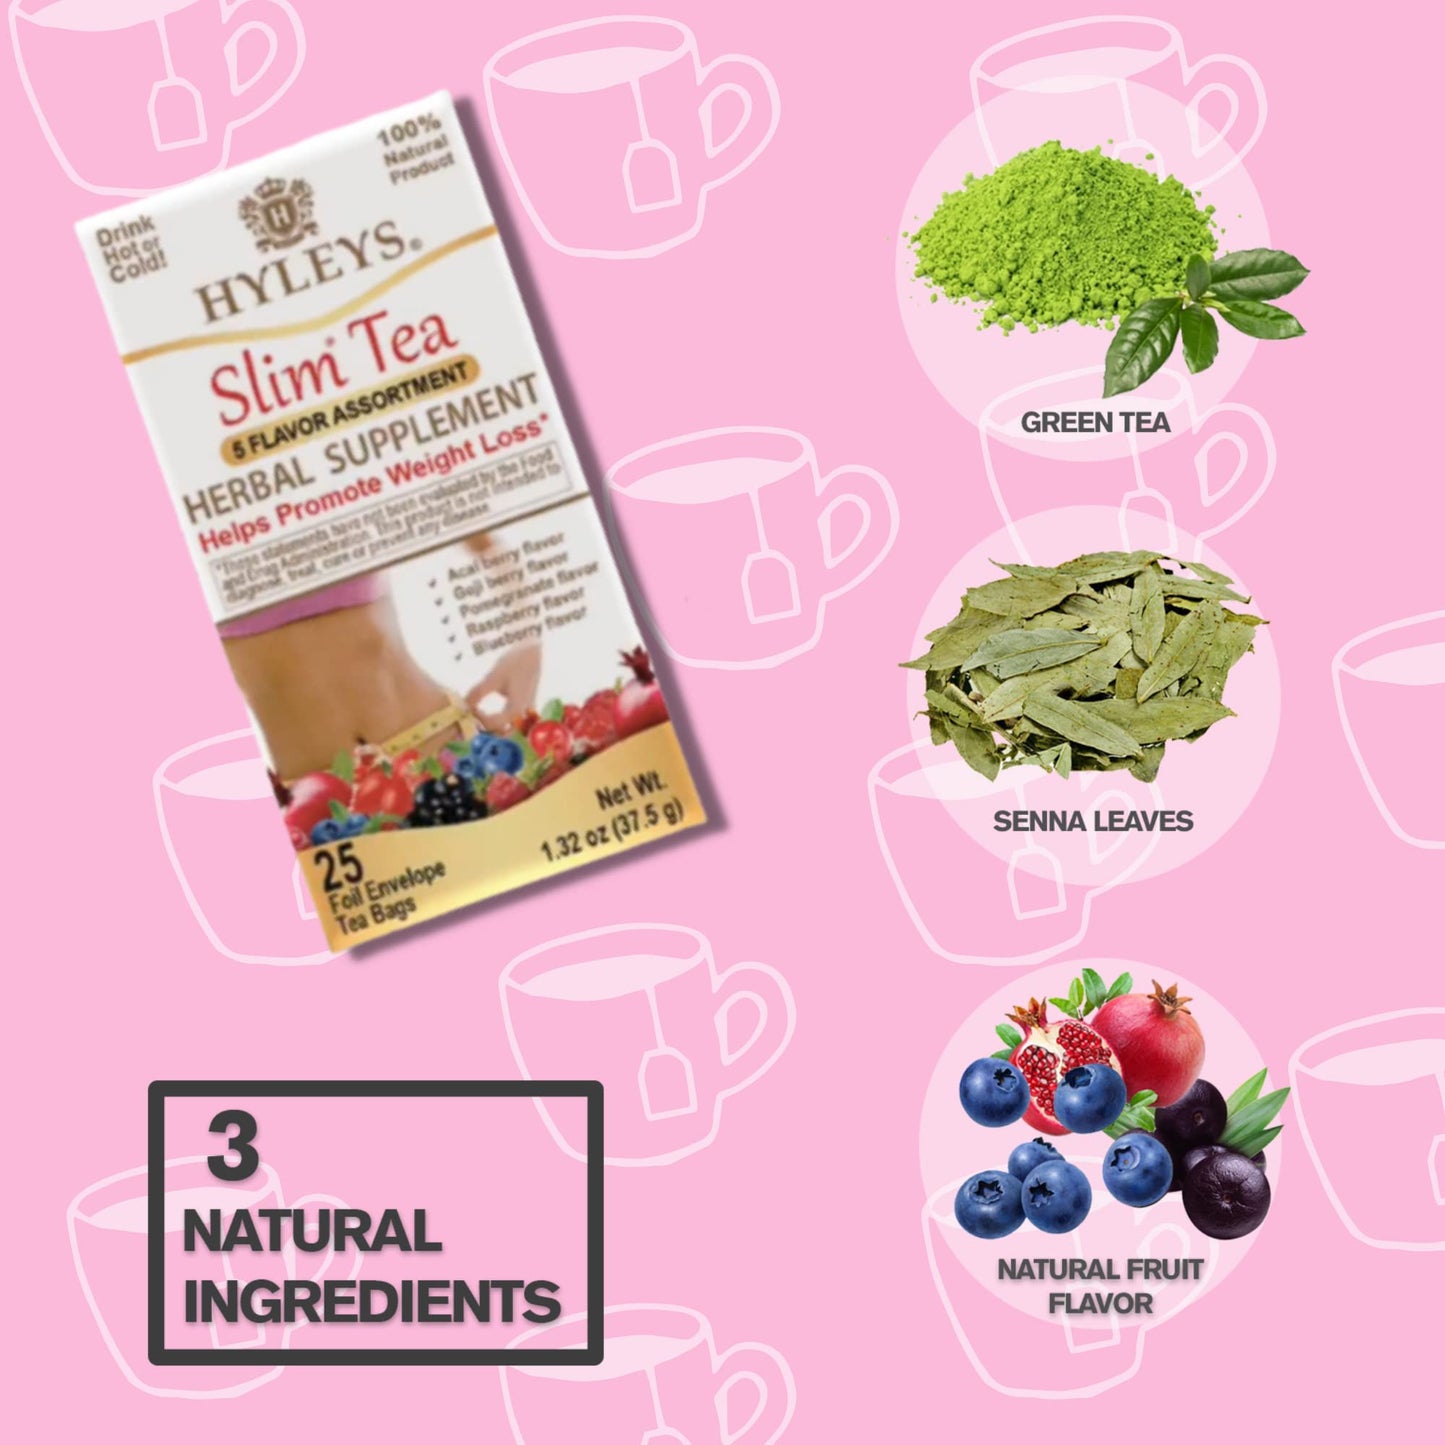 Hyleys Slim Tea 5 Flavor Assortment - Weight Loss Herbal Supplement Cleanse and Detox - 25 Tea Bags (1 Pack)